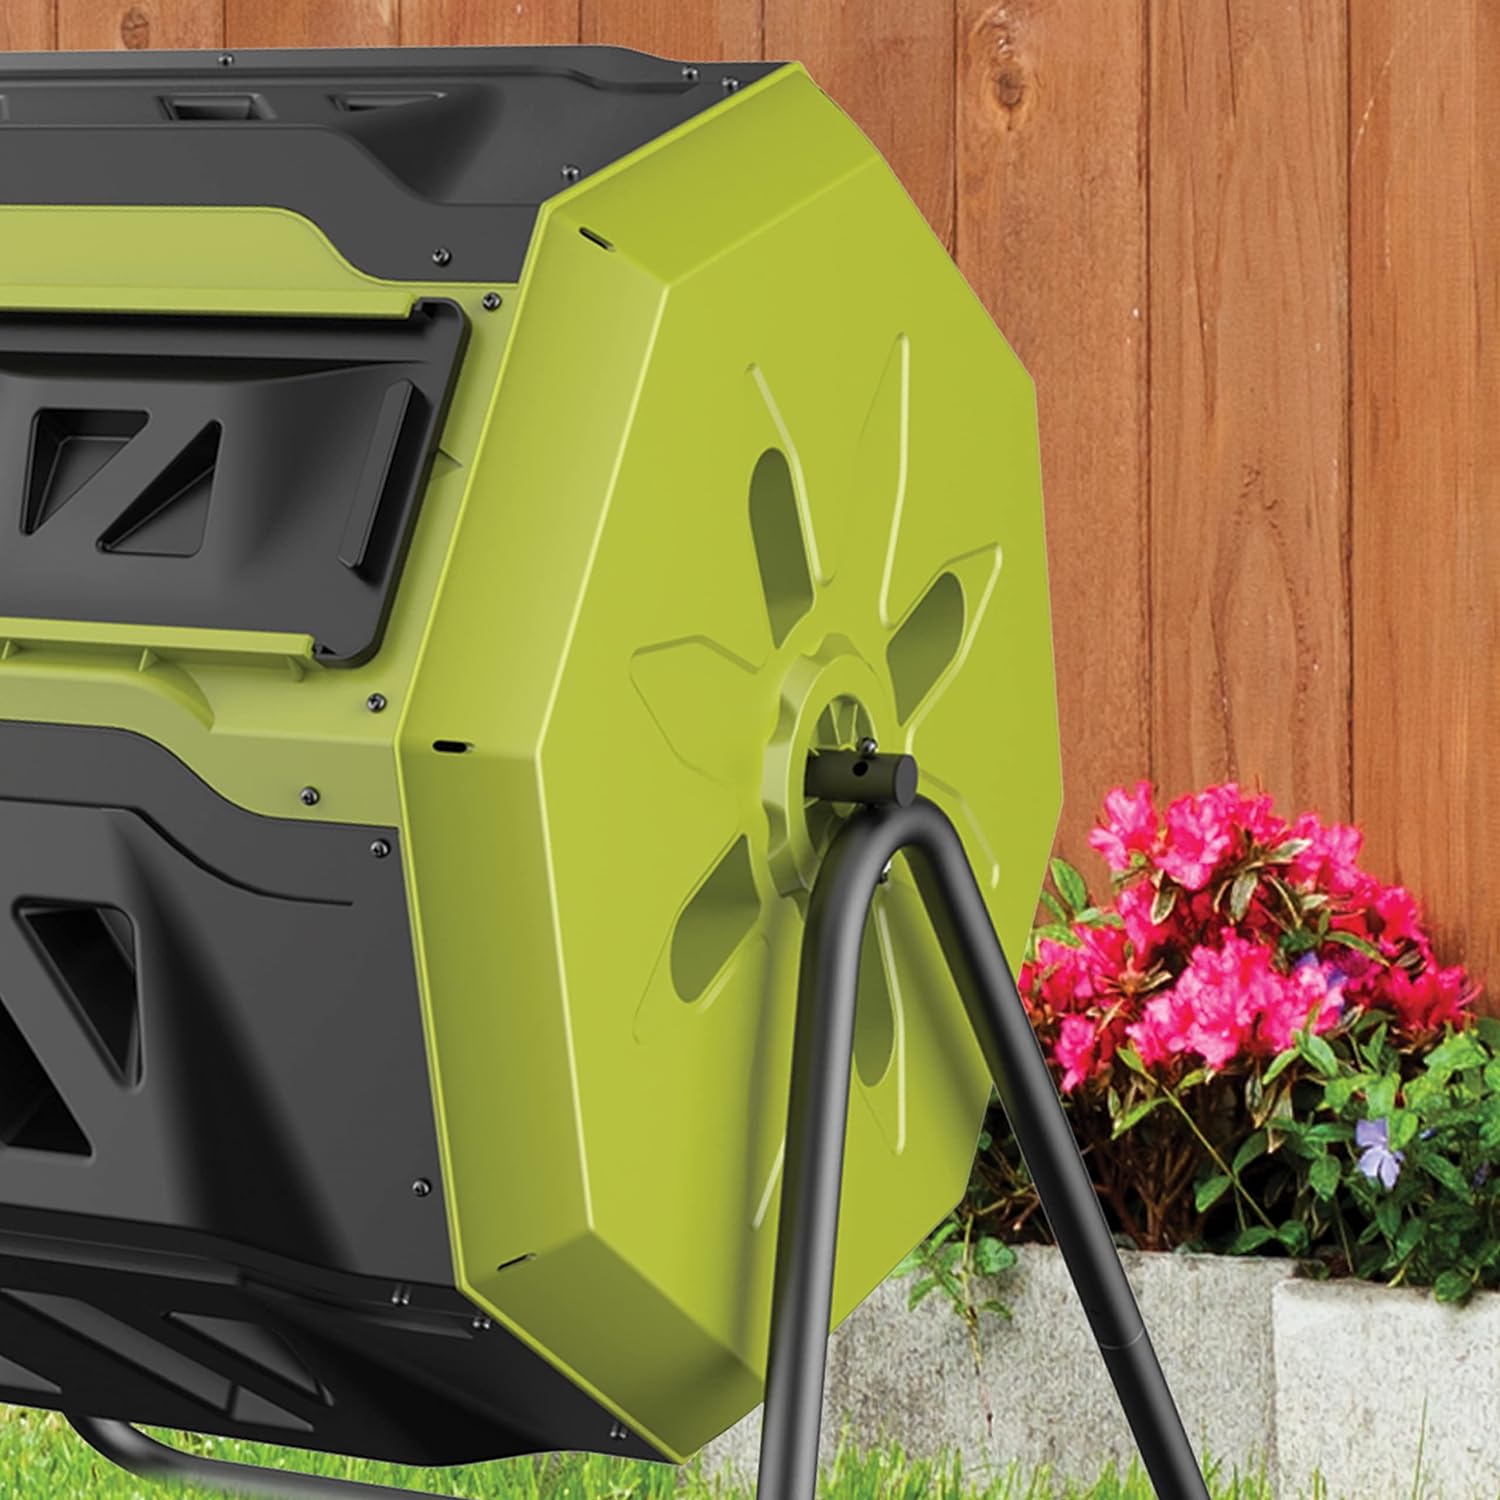 Sun Joe SJ-CMPS1 All-Season Outdoor Tumbling Composter, Dual Sliding Chamber, 42-Gallon, 2-10 Weeks, BPA-Free Material